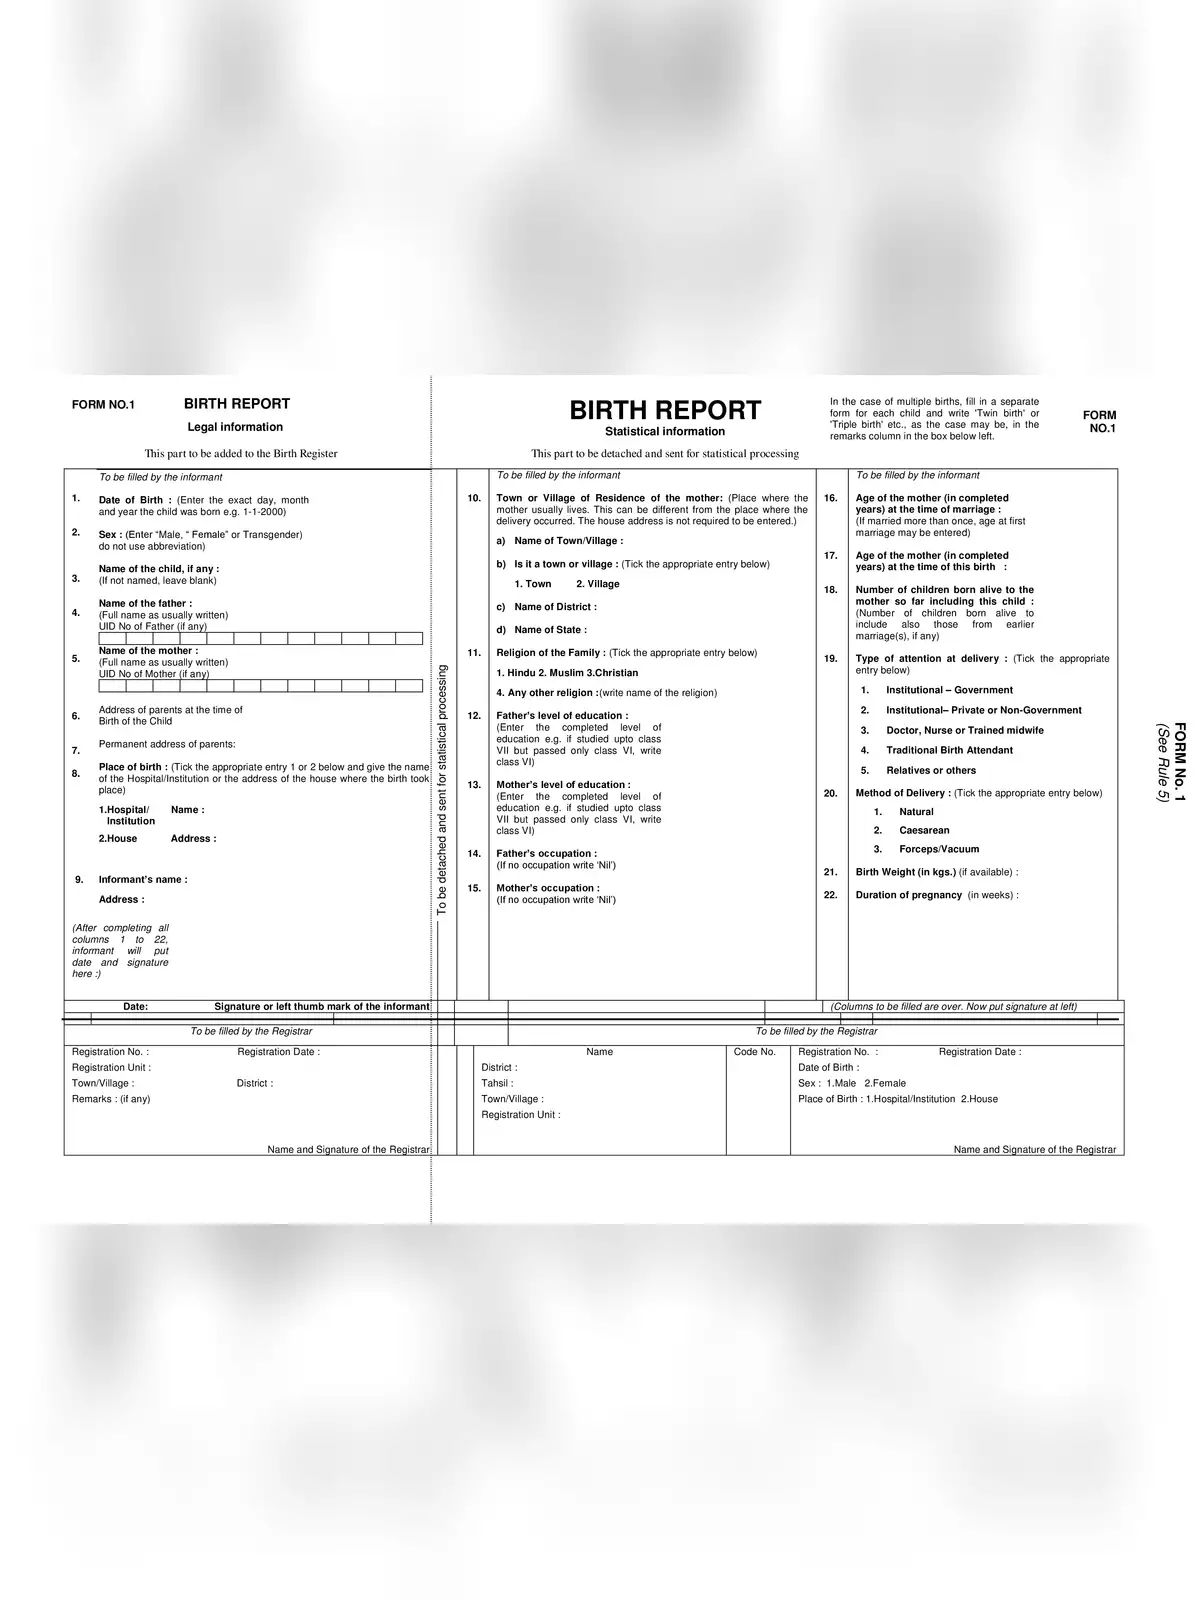 Birth Report Form